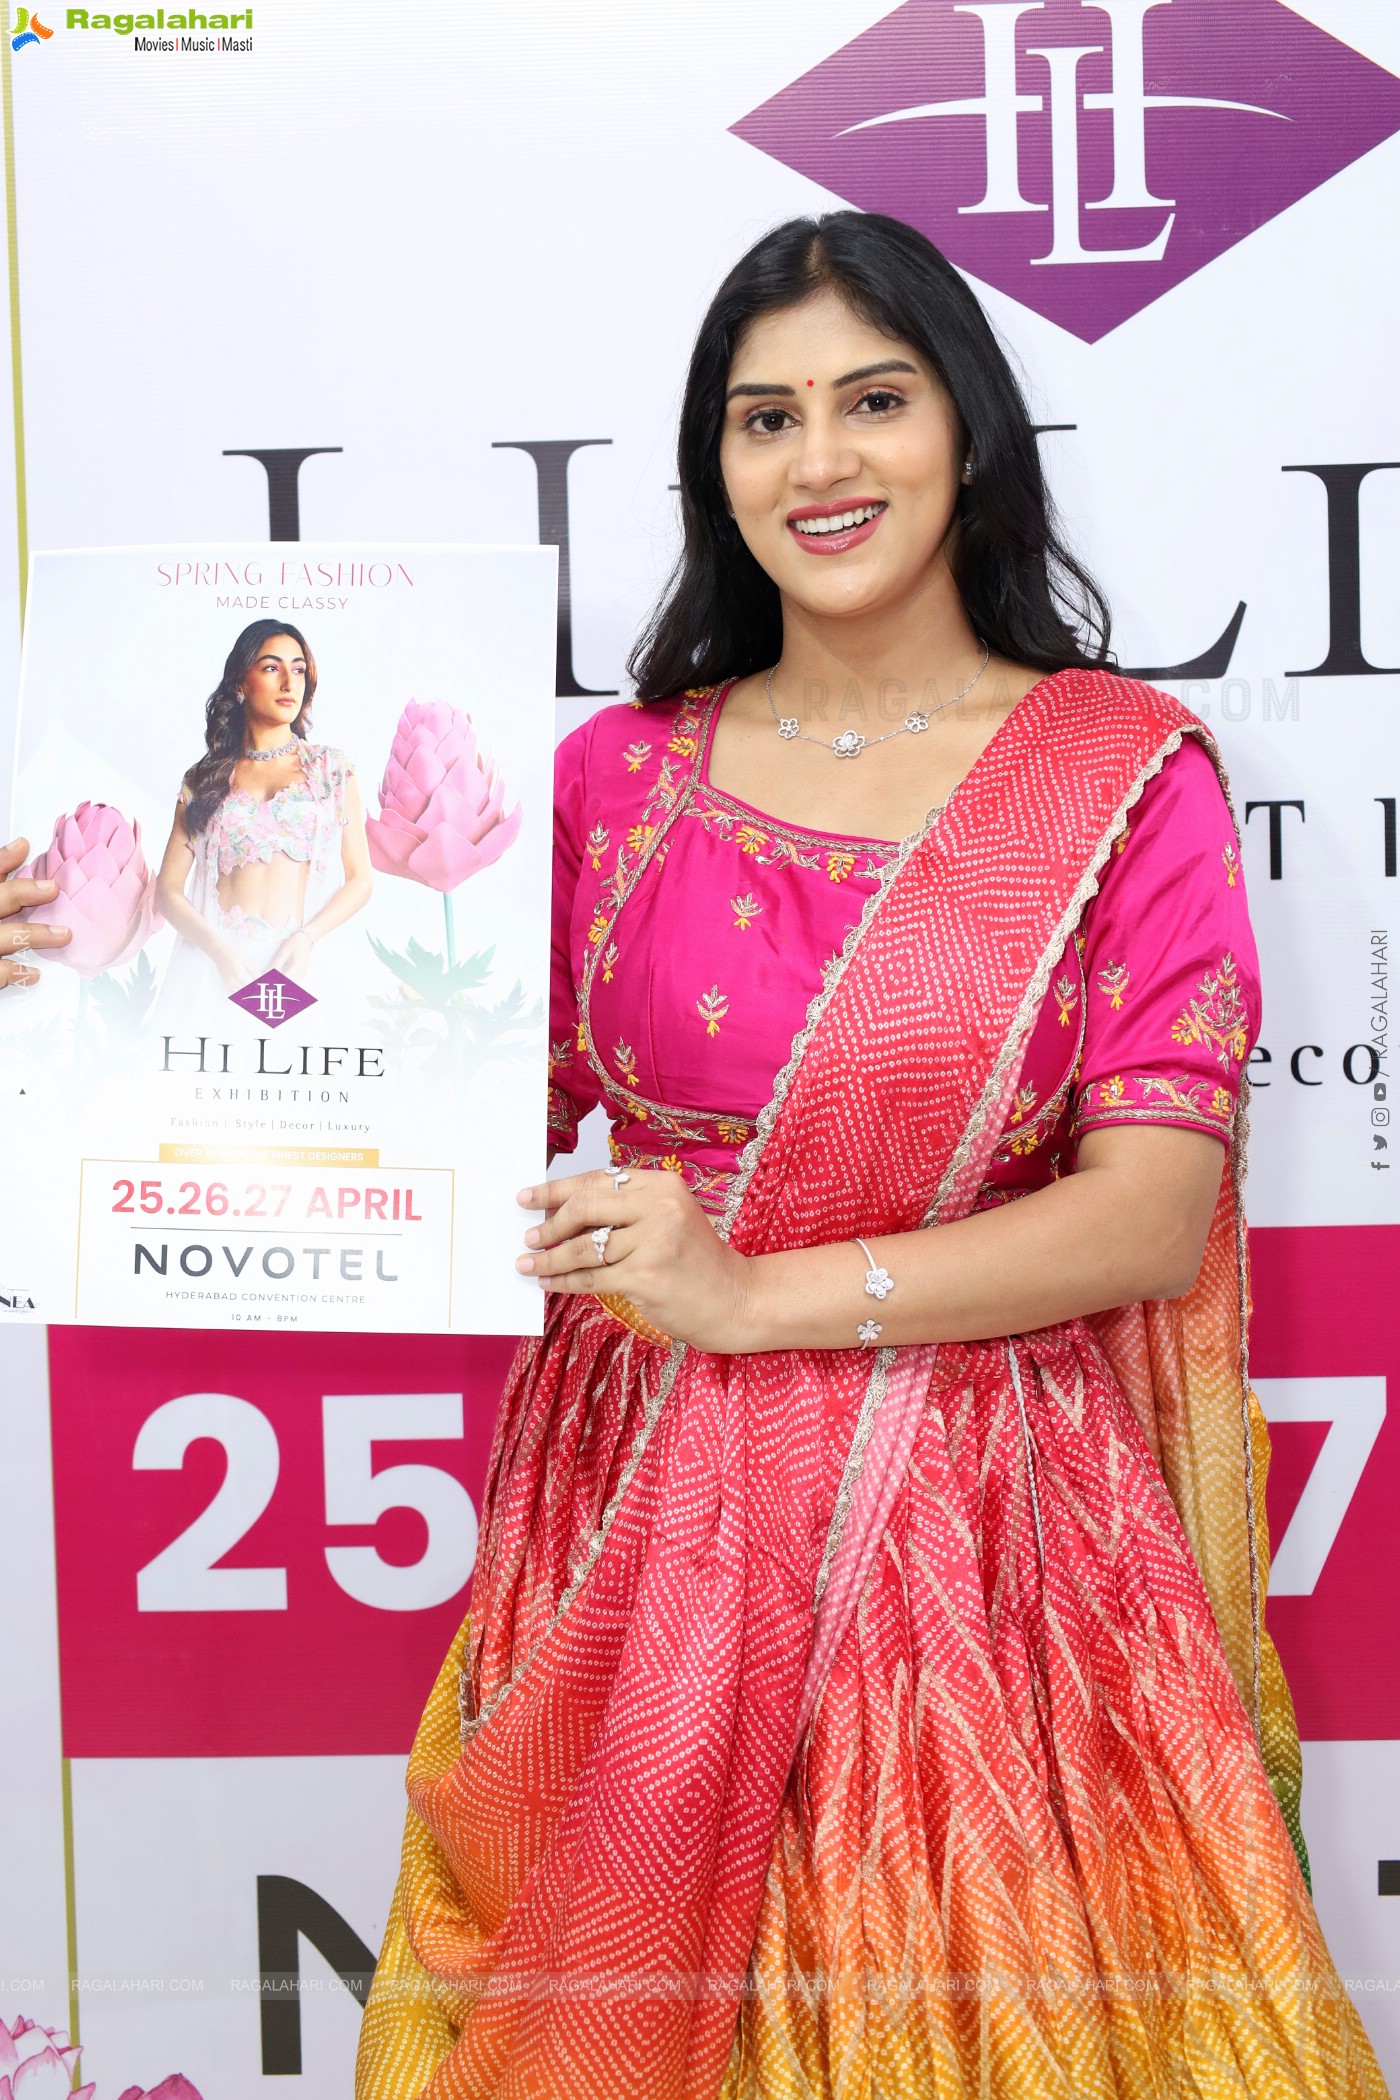 Hi-Life Exhibition Grand Fashion Showcase Event, Hyderabad